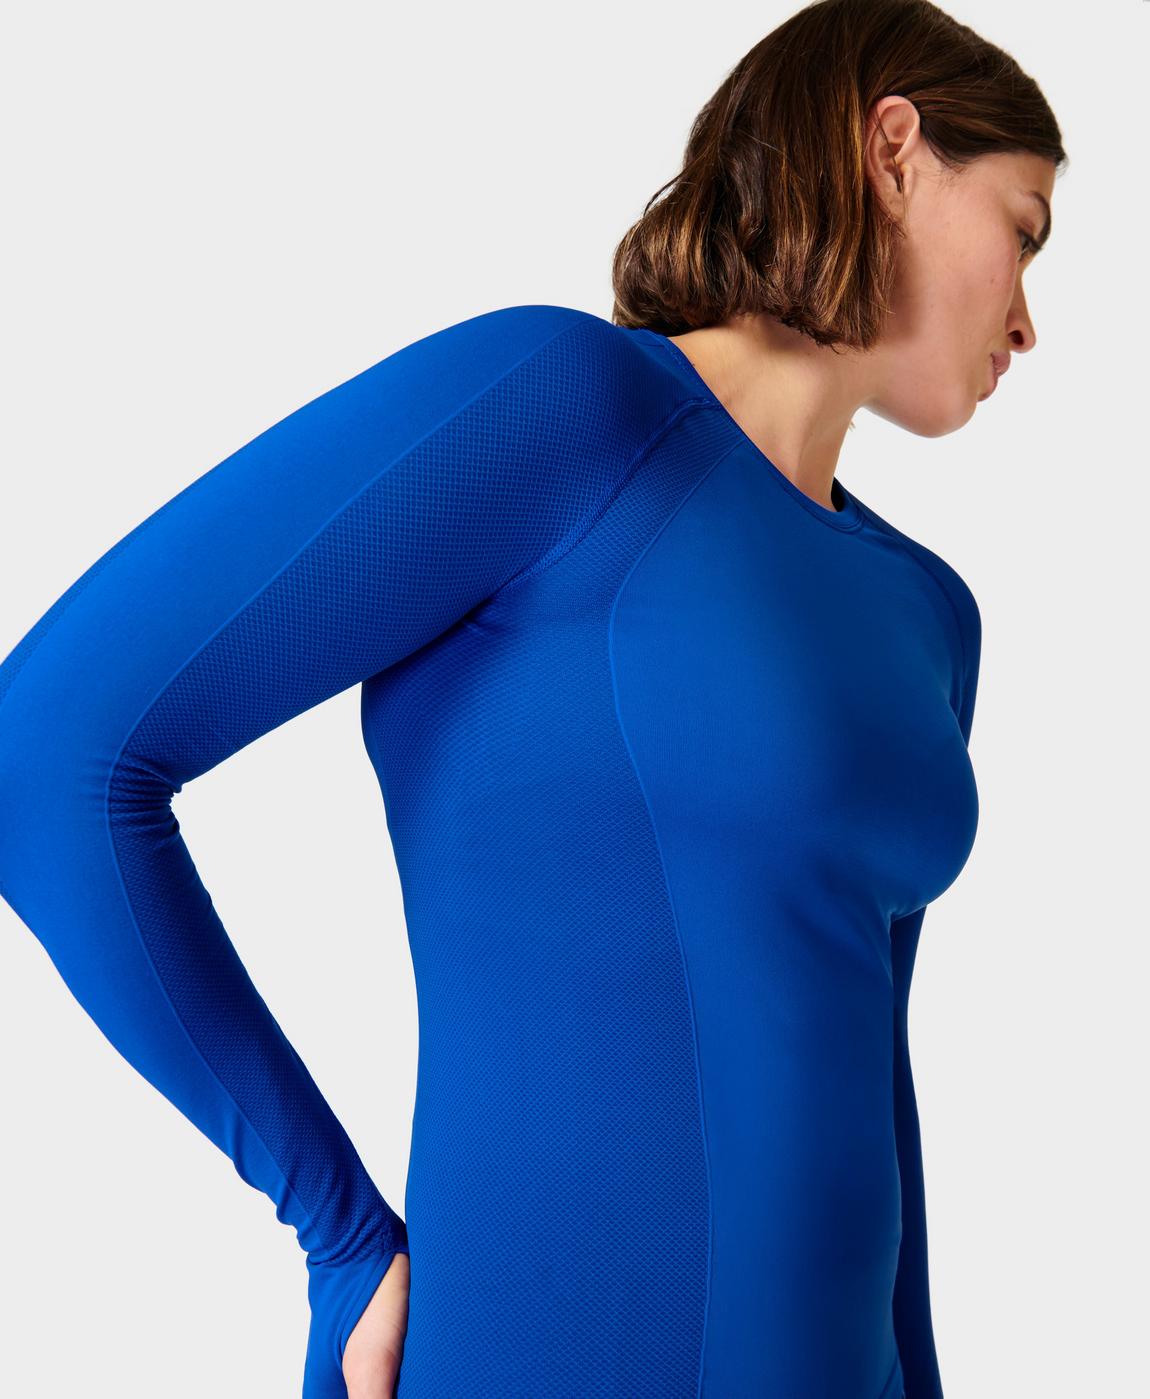 Athlete Seamless Workout Long Sleeve Top - Lightning Blue